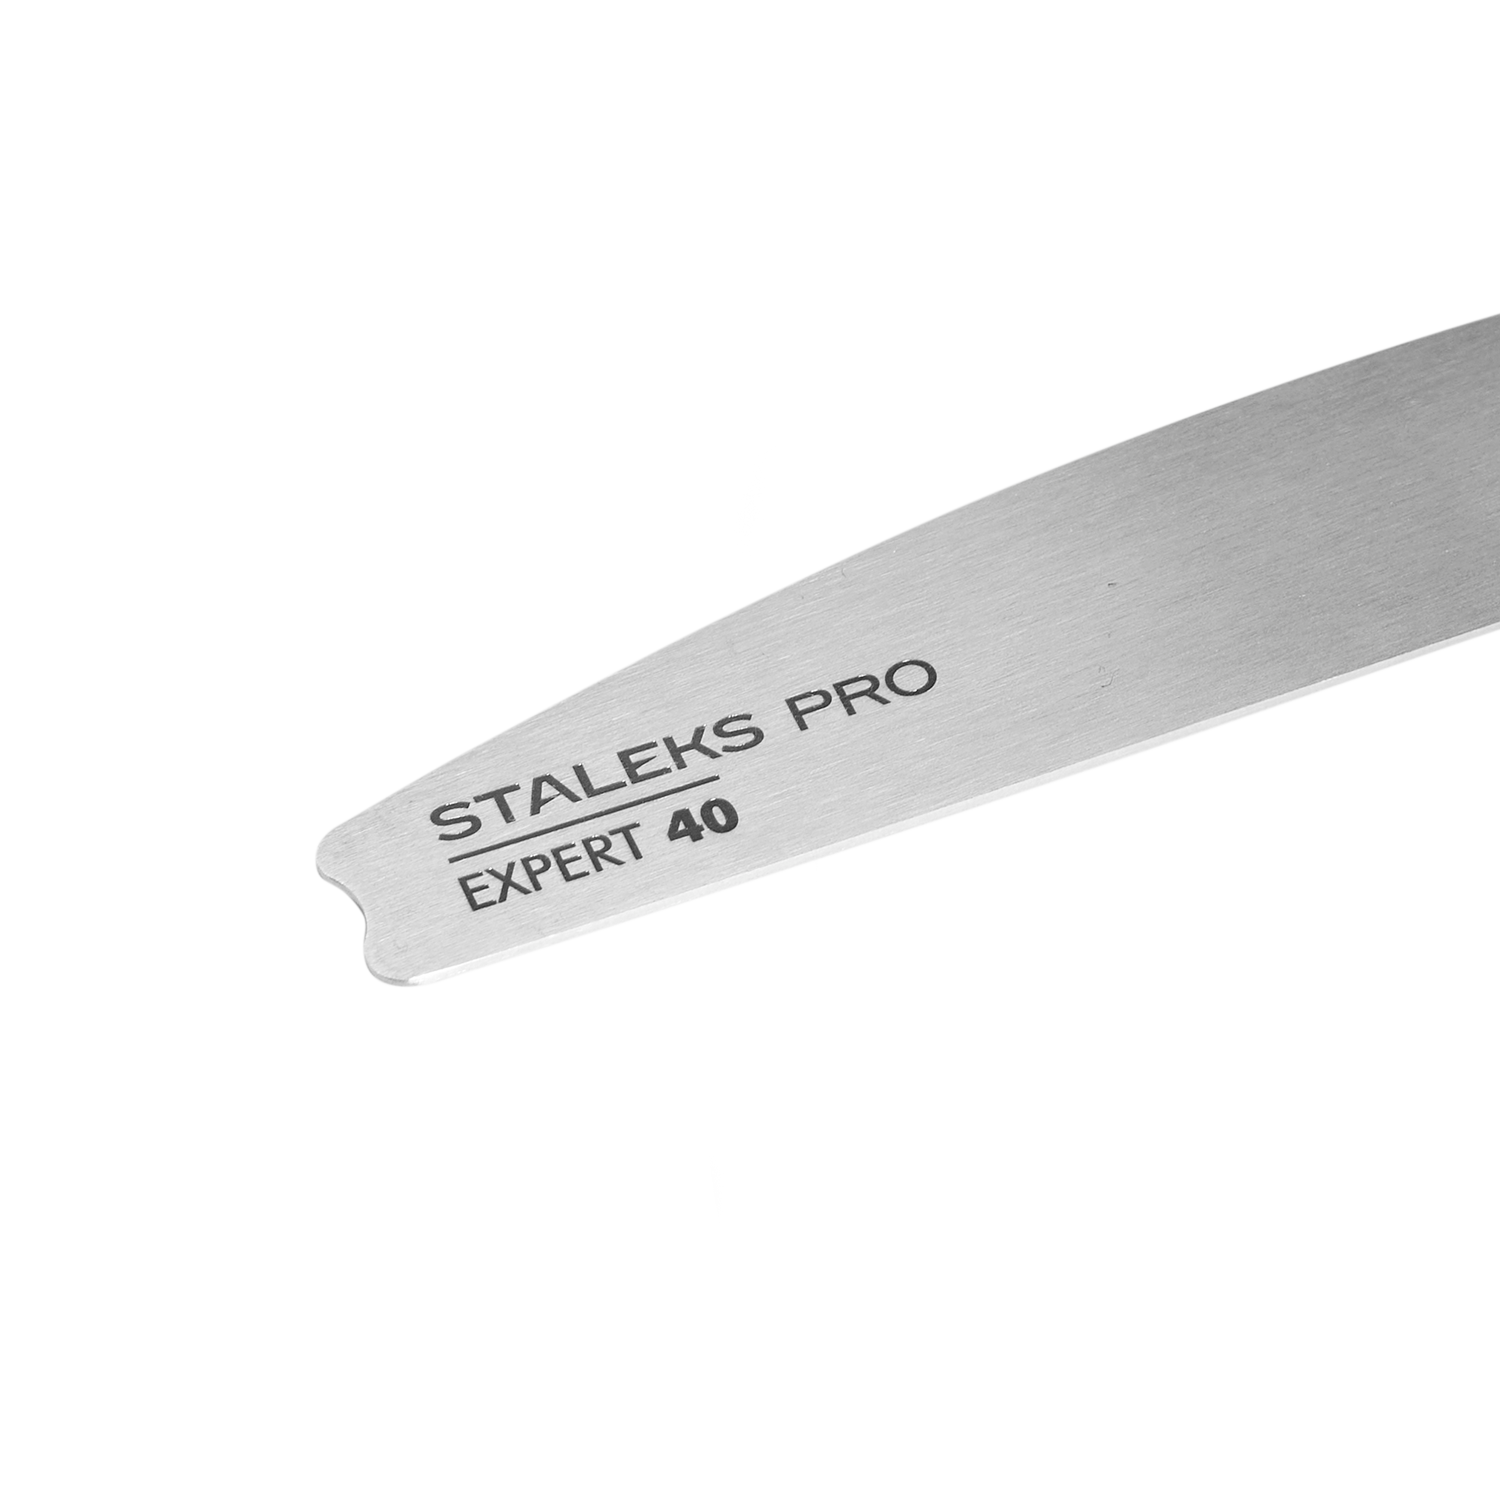 Nail file metal crescent (base) EXPERT 40 Staleks